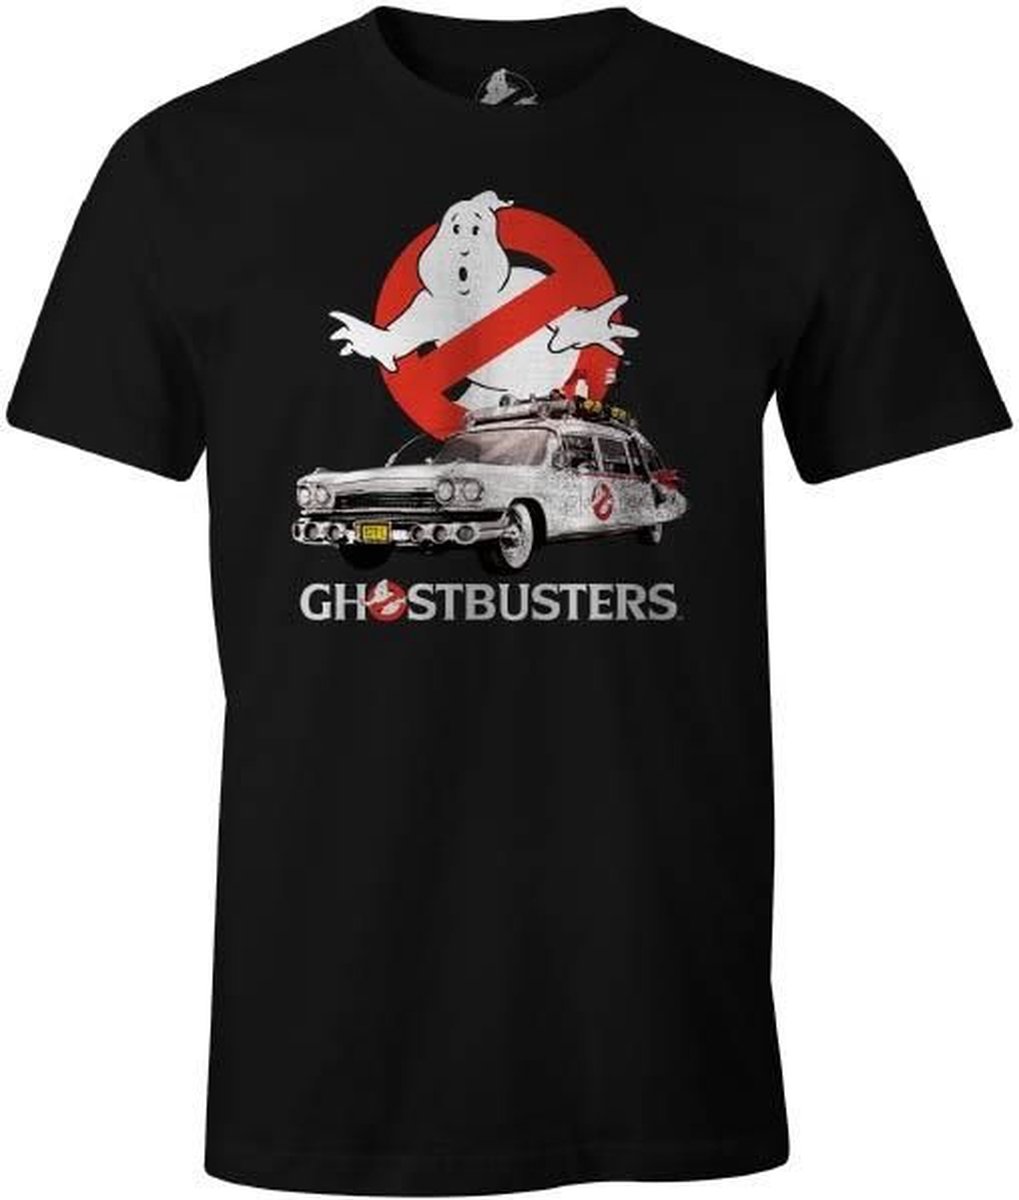 Ghostbusters - Black Men's T-shirt- M